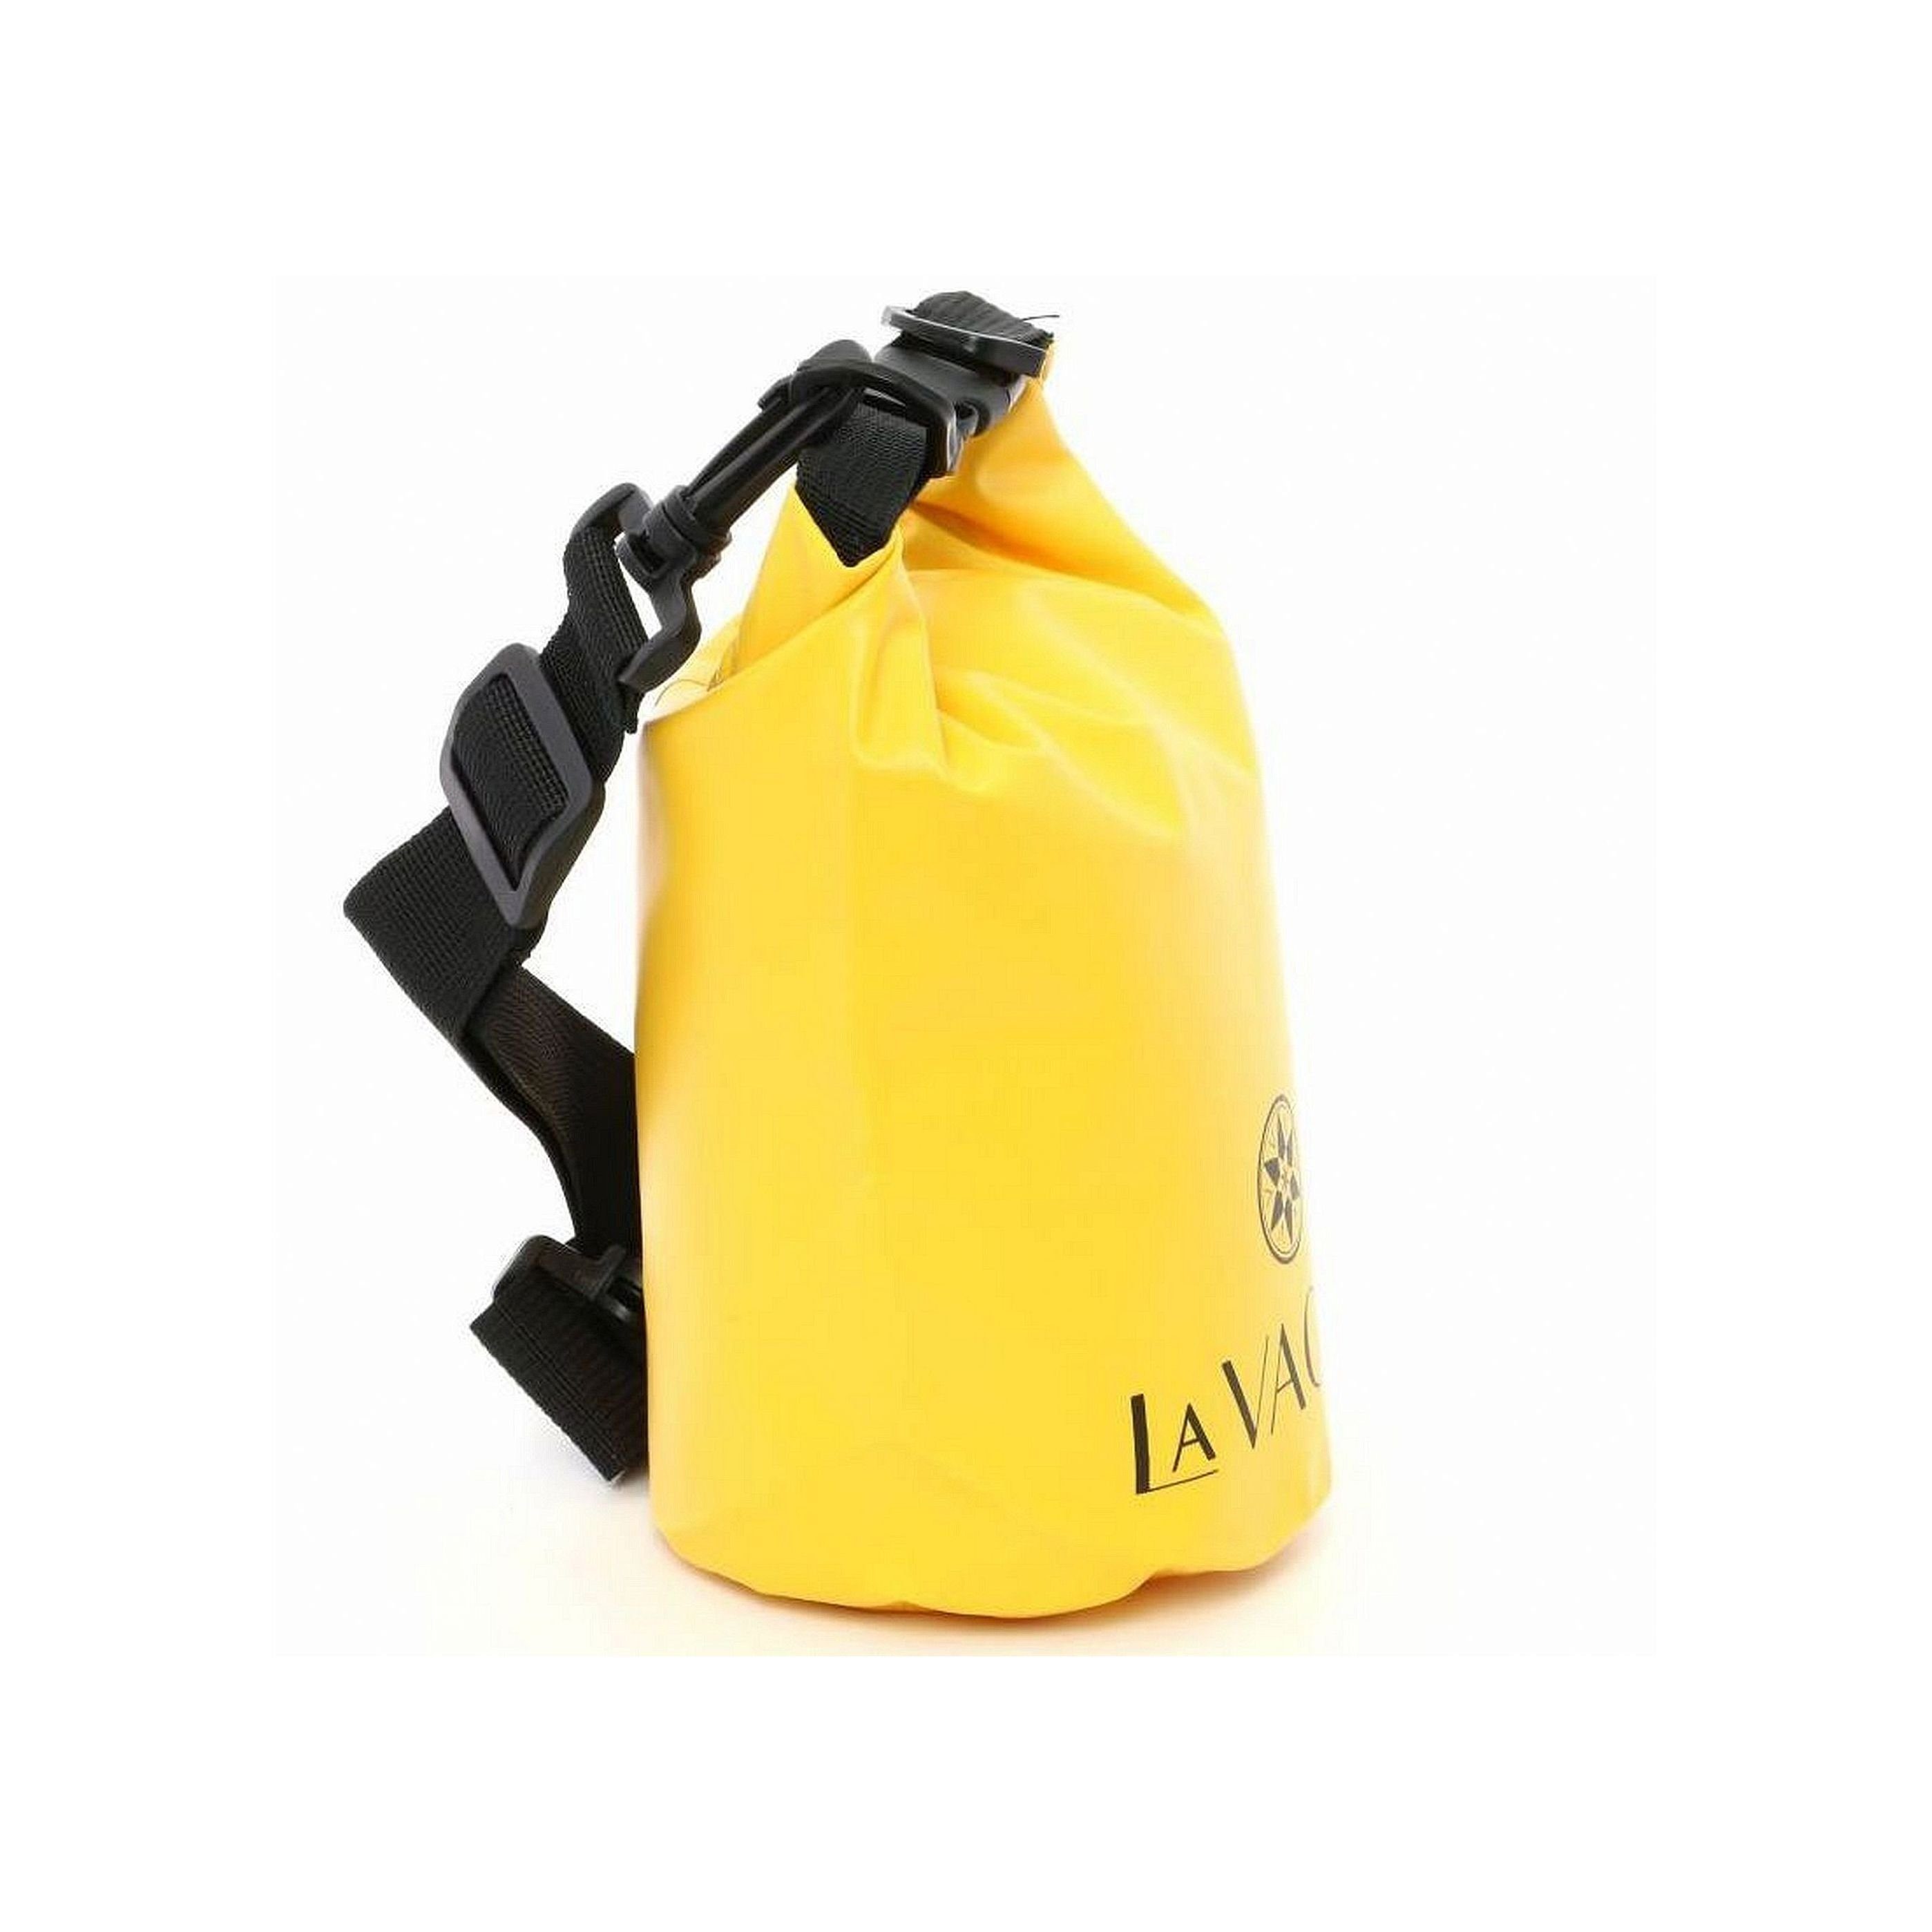 LA VAGUE Drybag 1,5l packsack gelb ISAR wasserfester